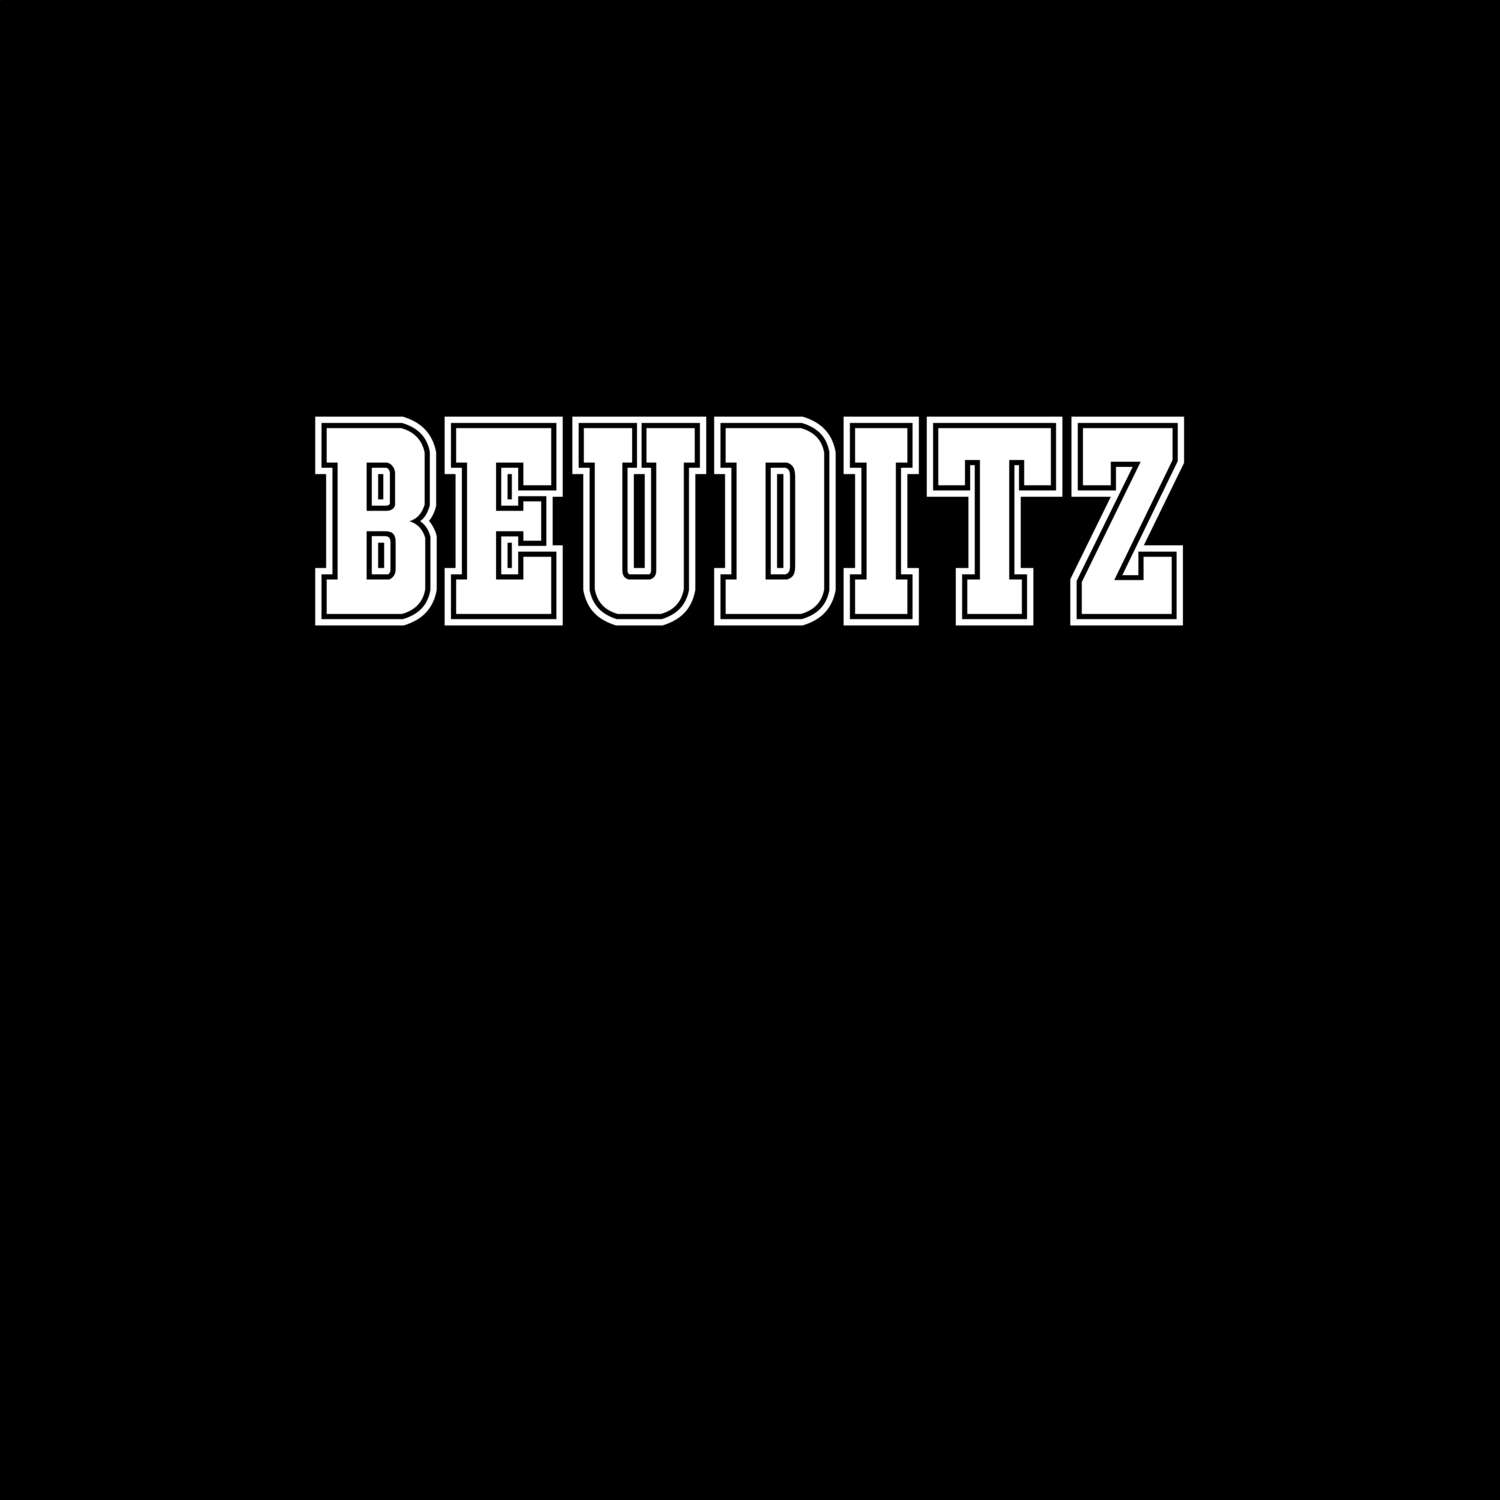 Beuditz T-Shirt »Classic«